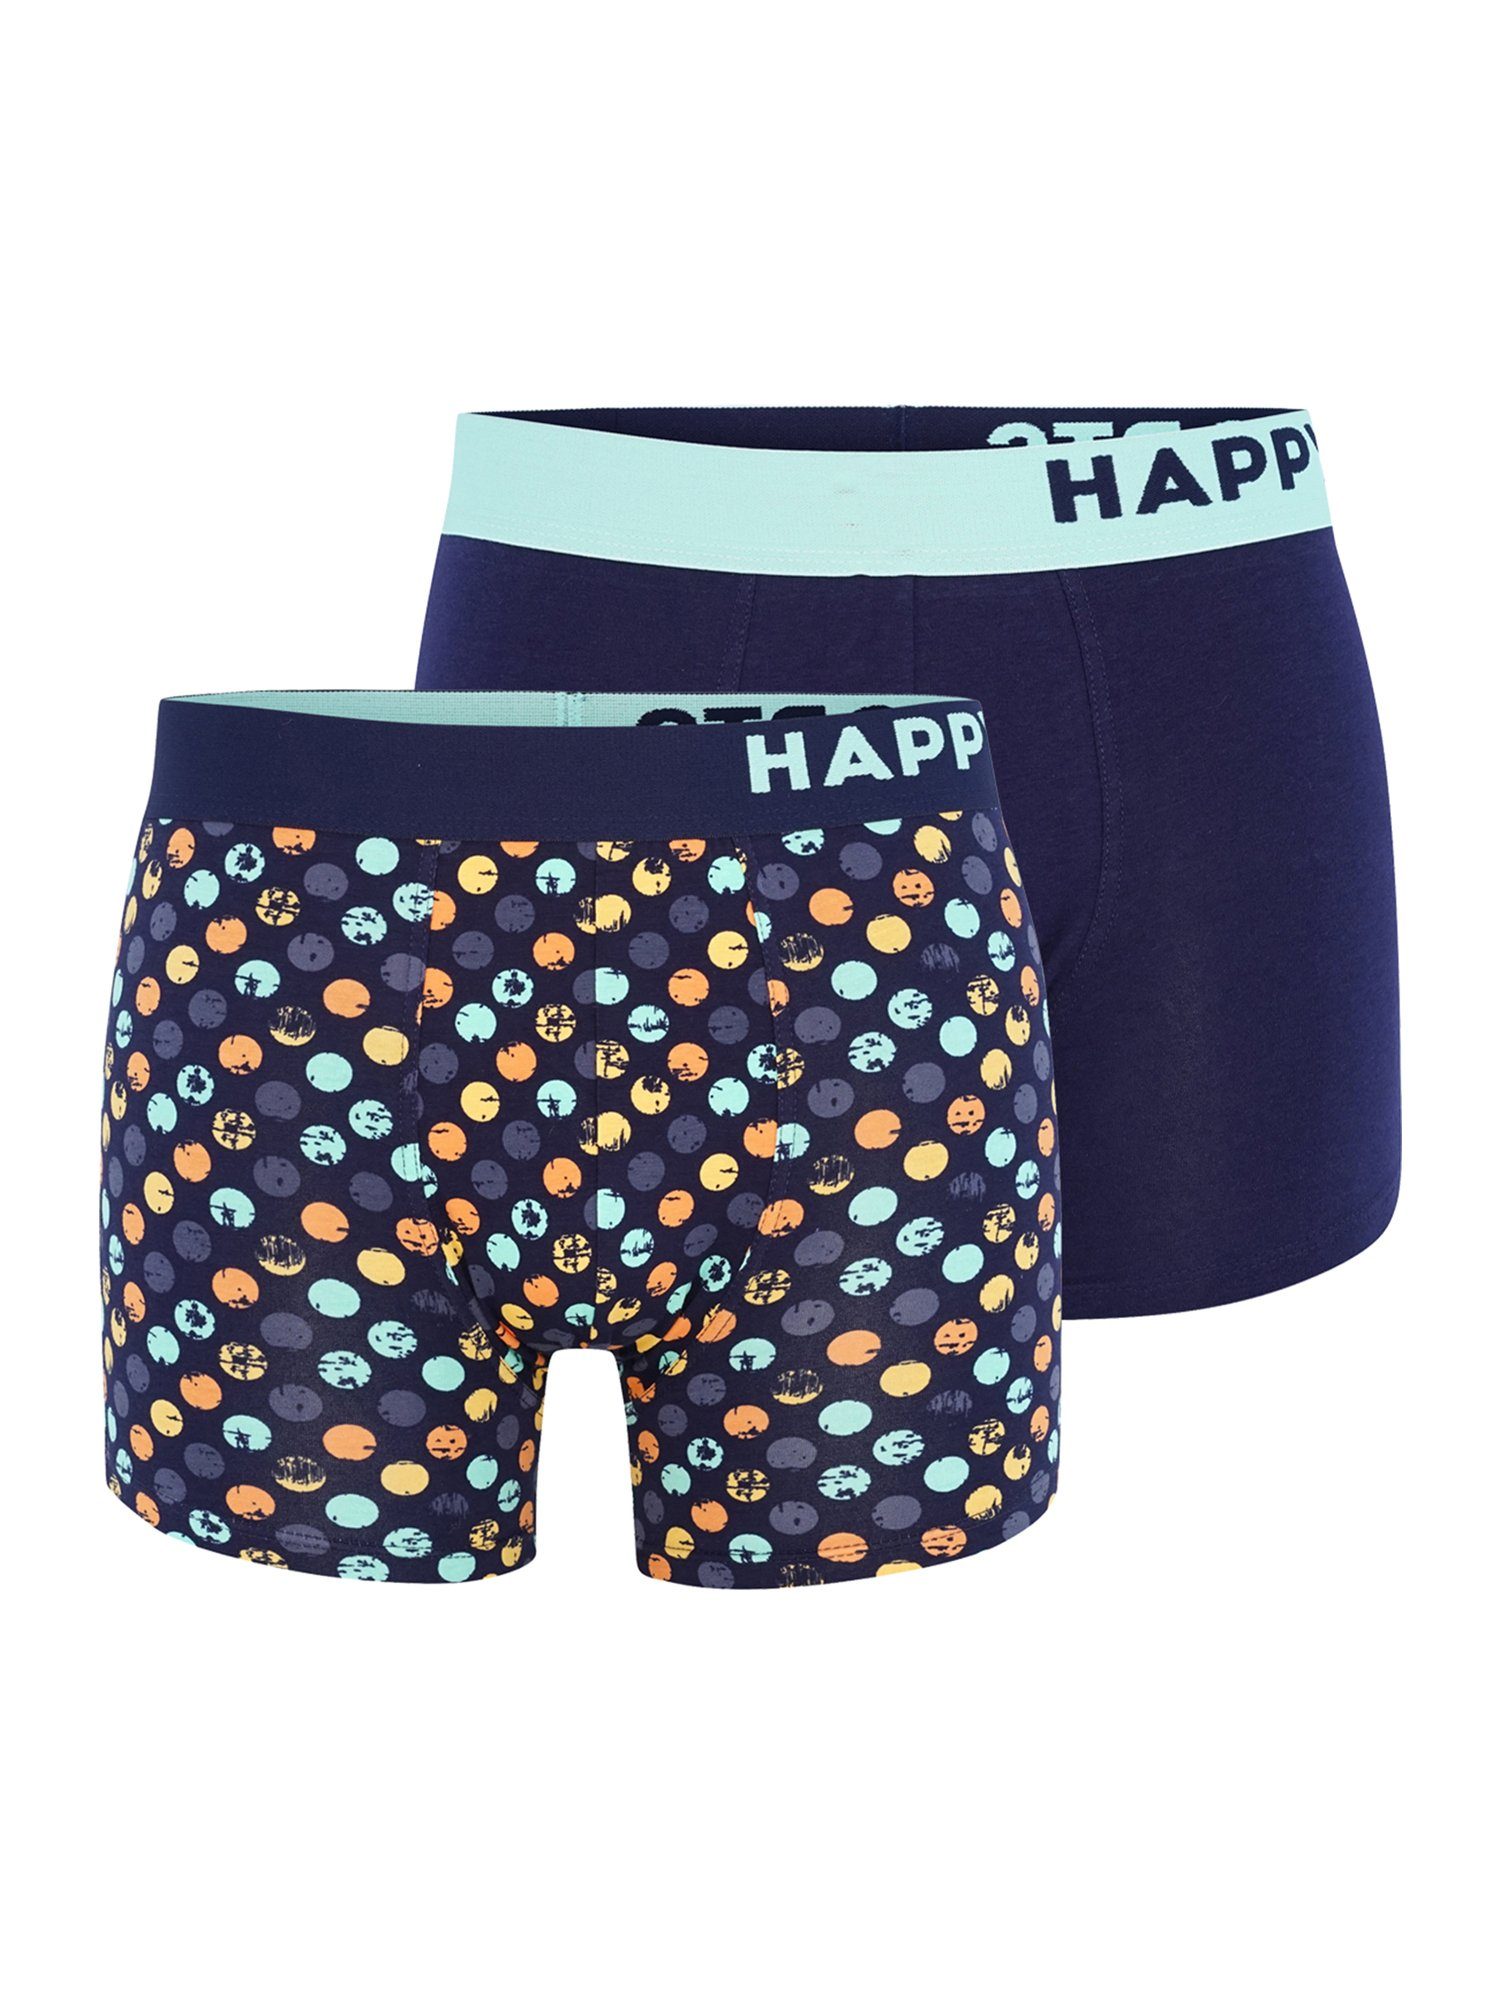 Retro Motivprint HAPPY Trunks SHORTS Polka Dots Pants